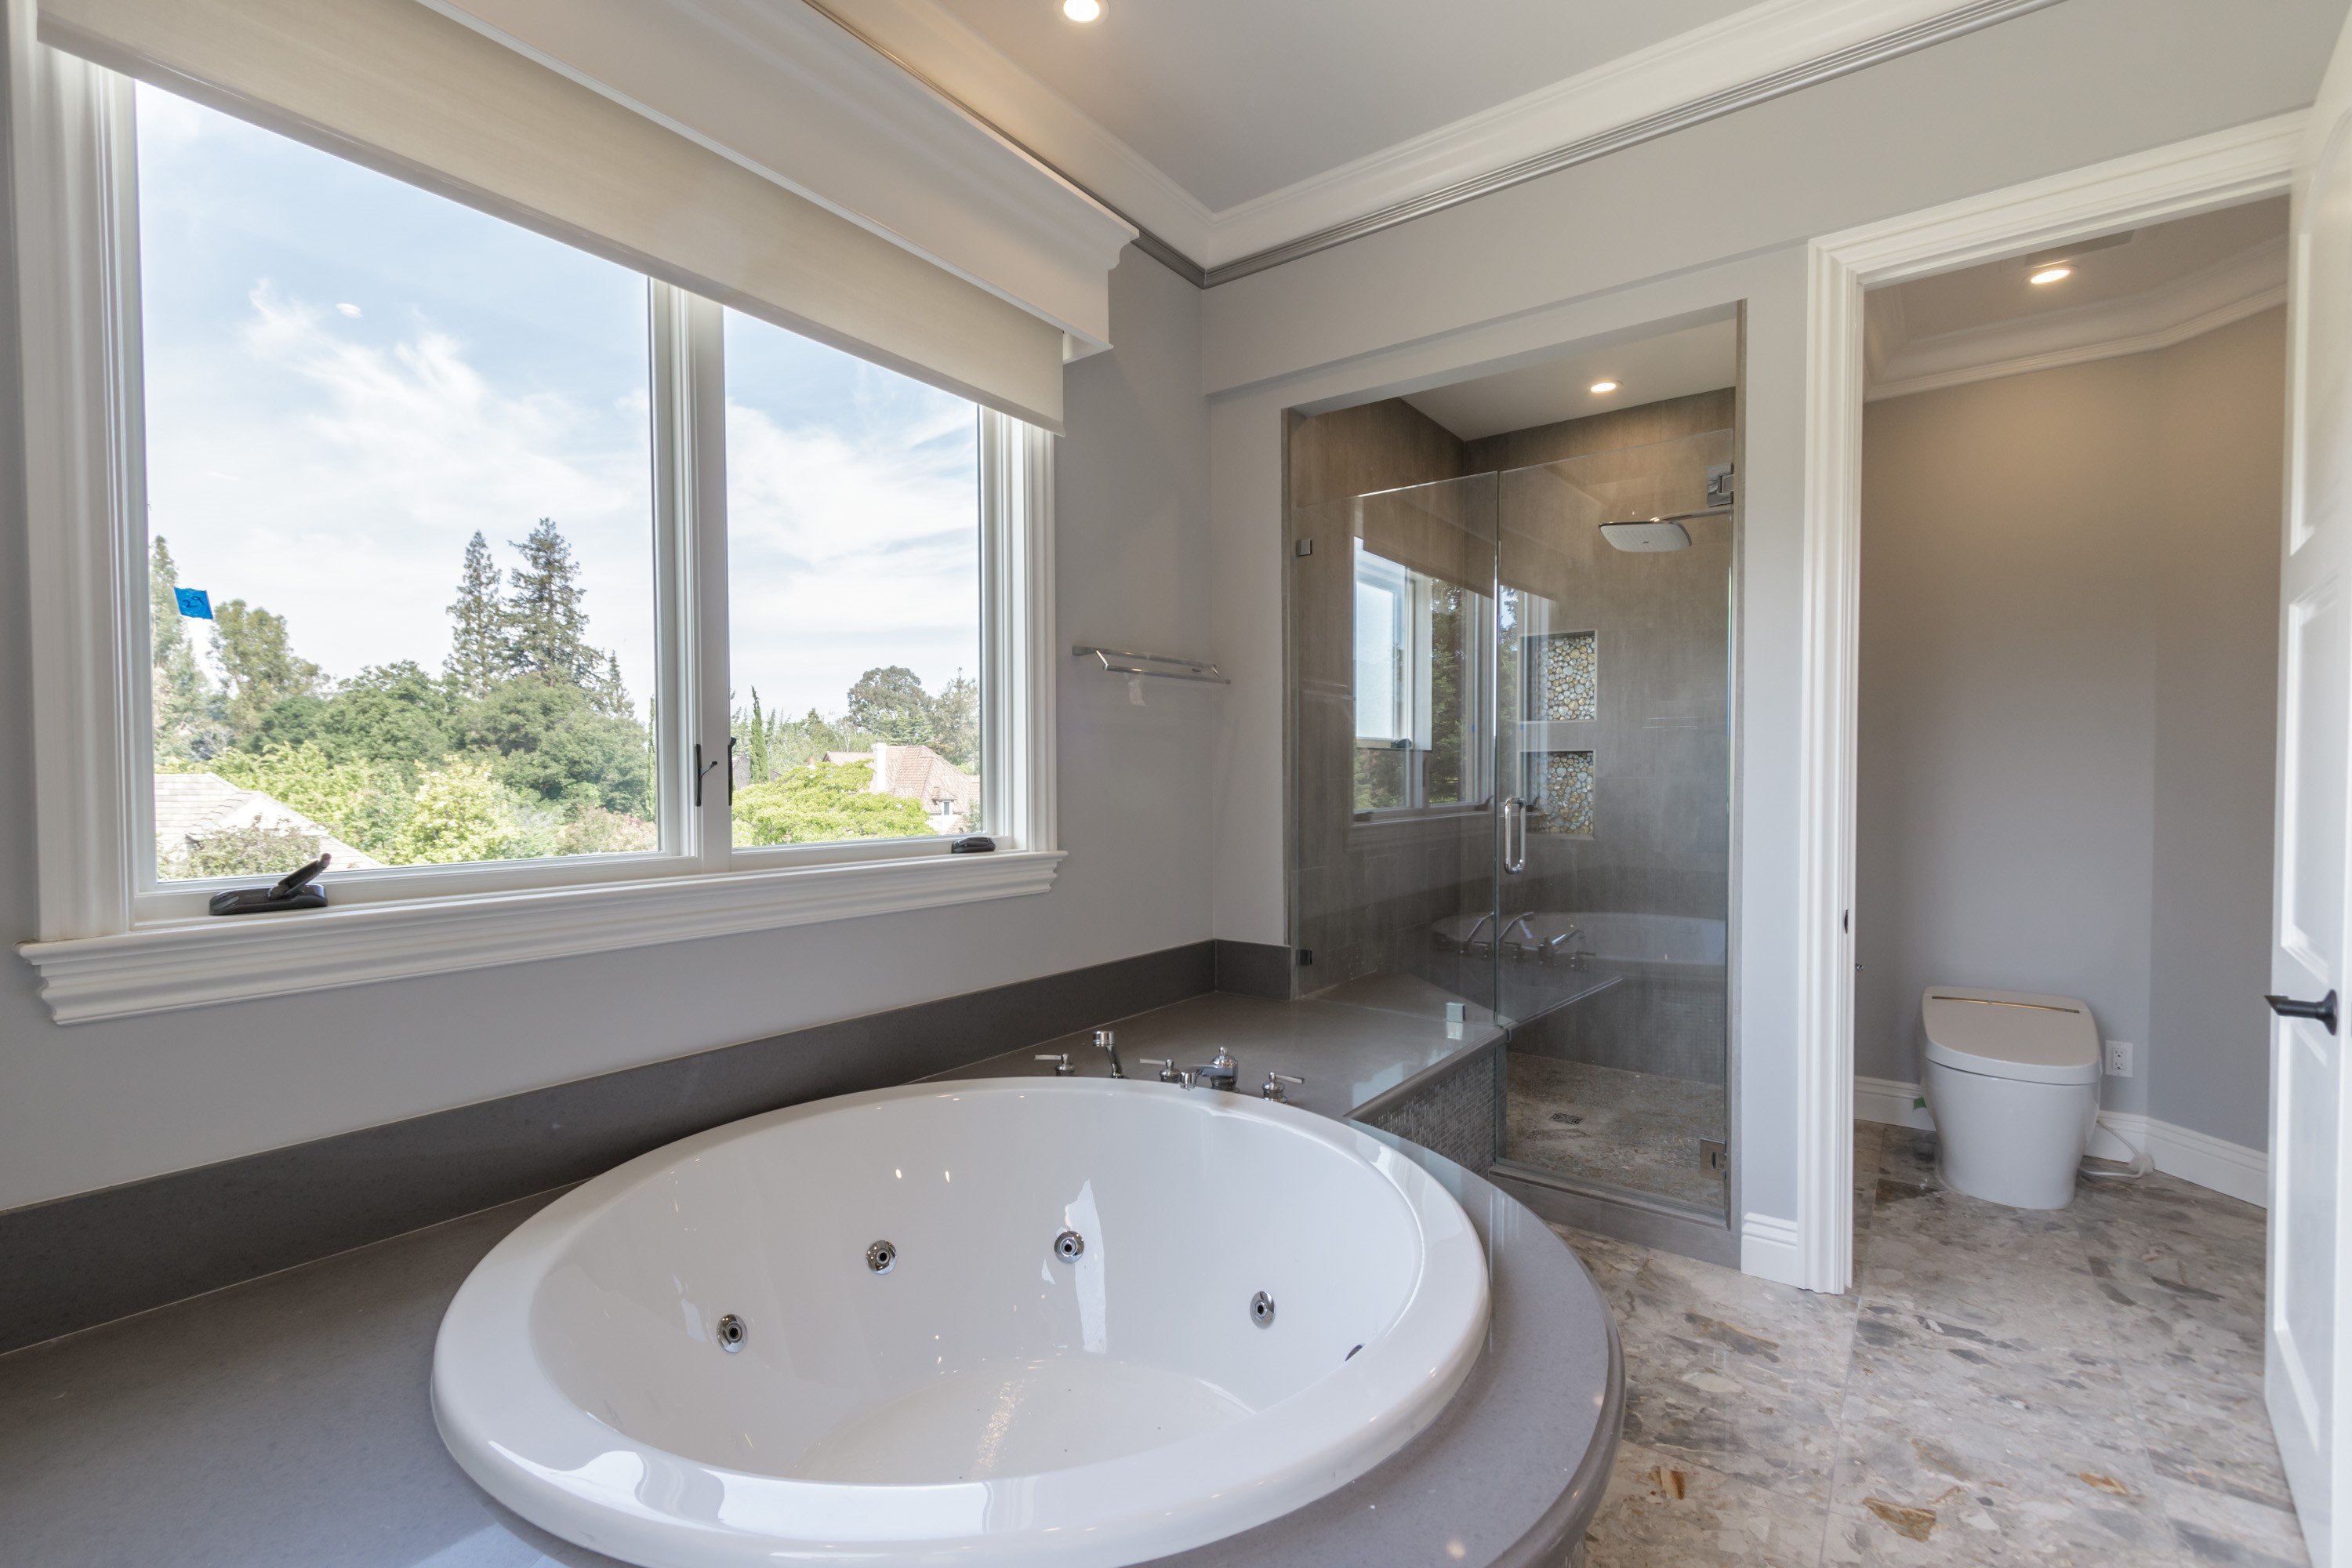 Master Bathroom design for custom built homes in Cupertino